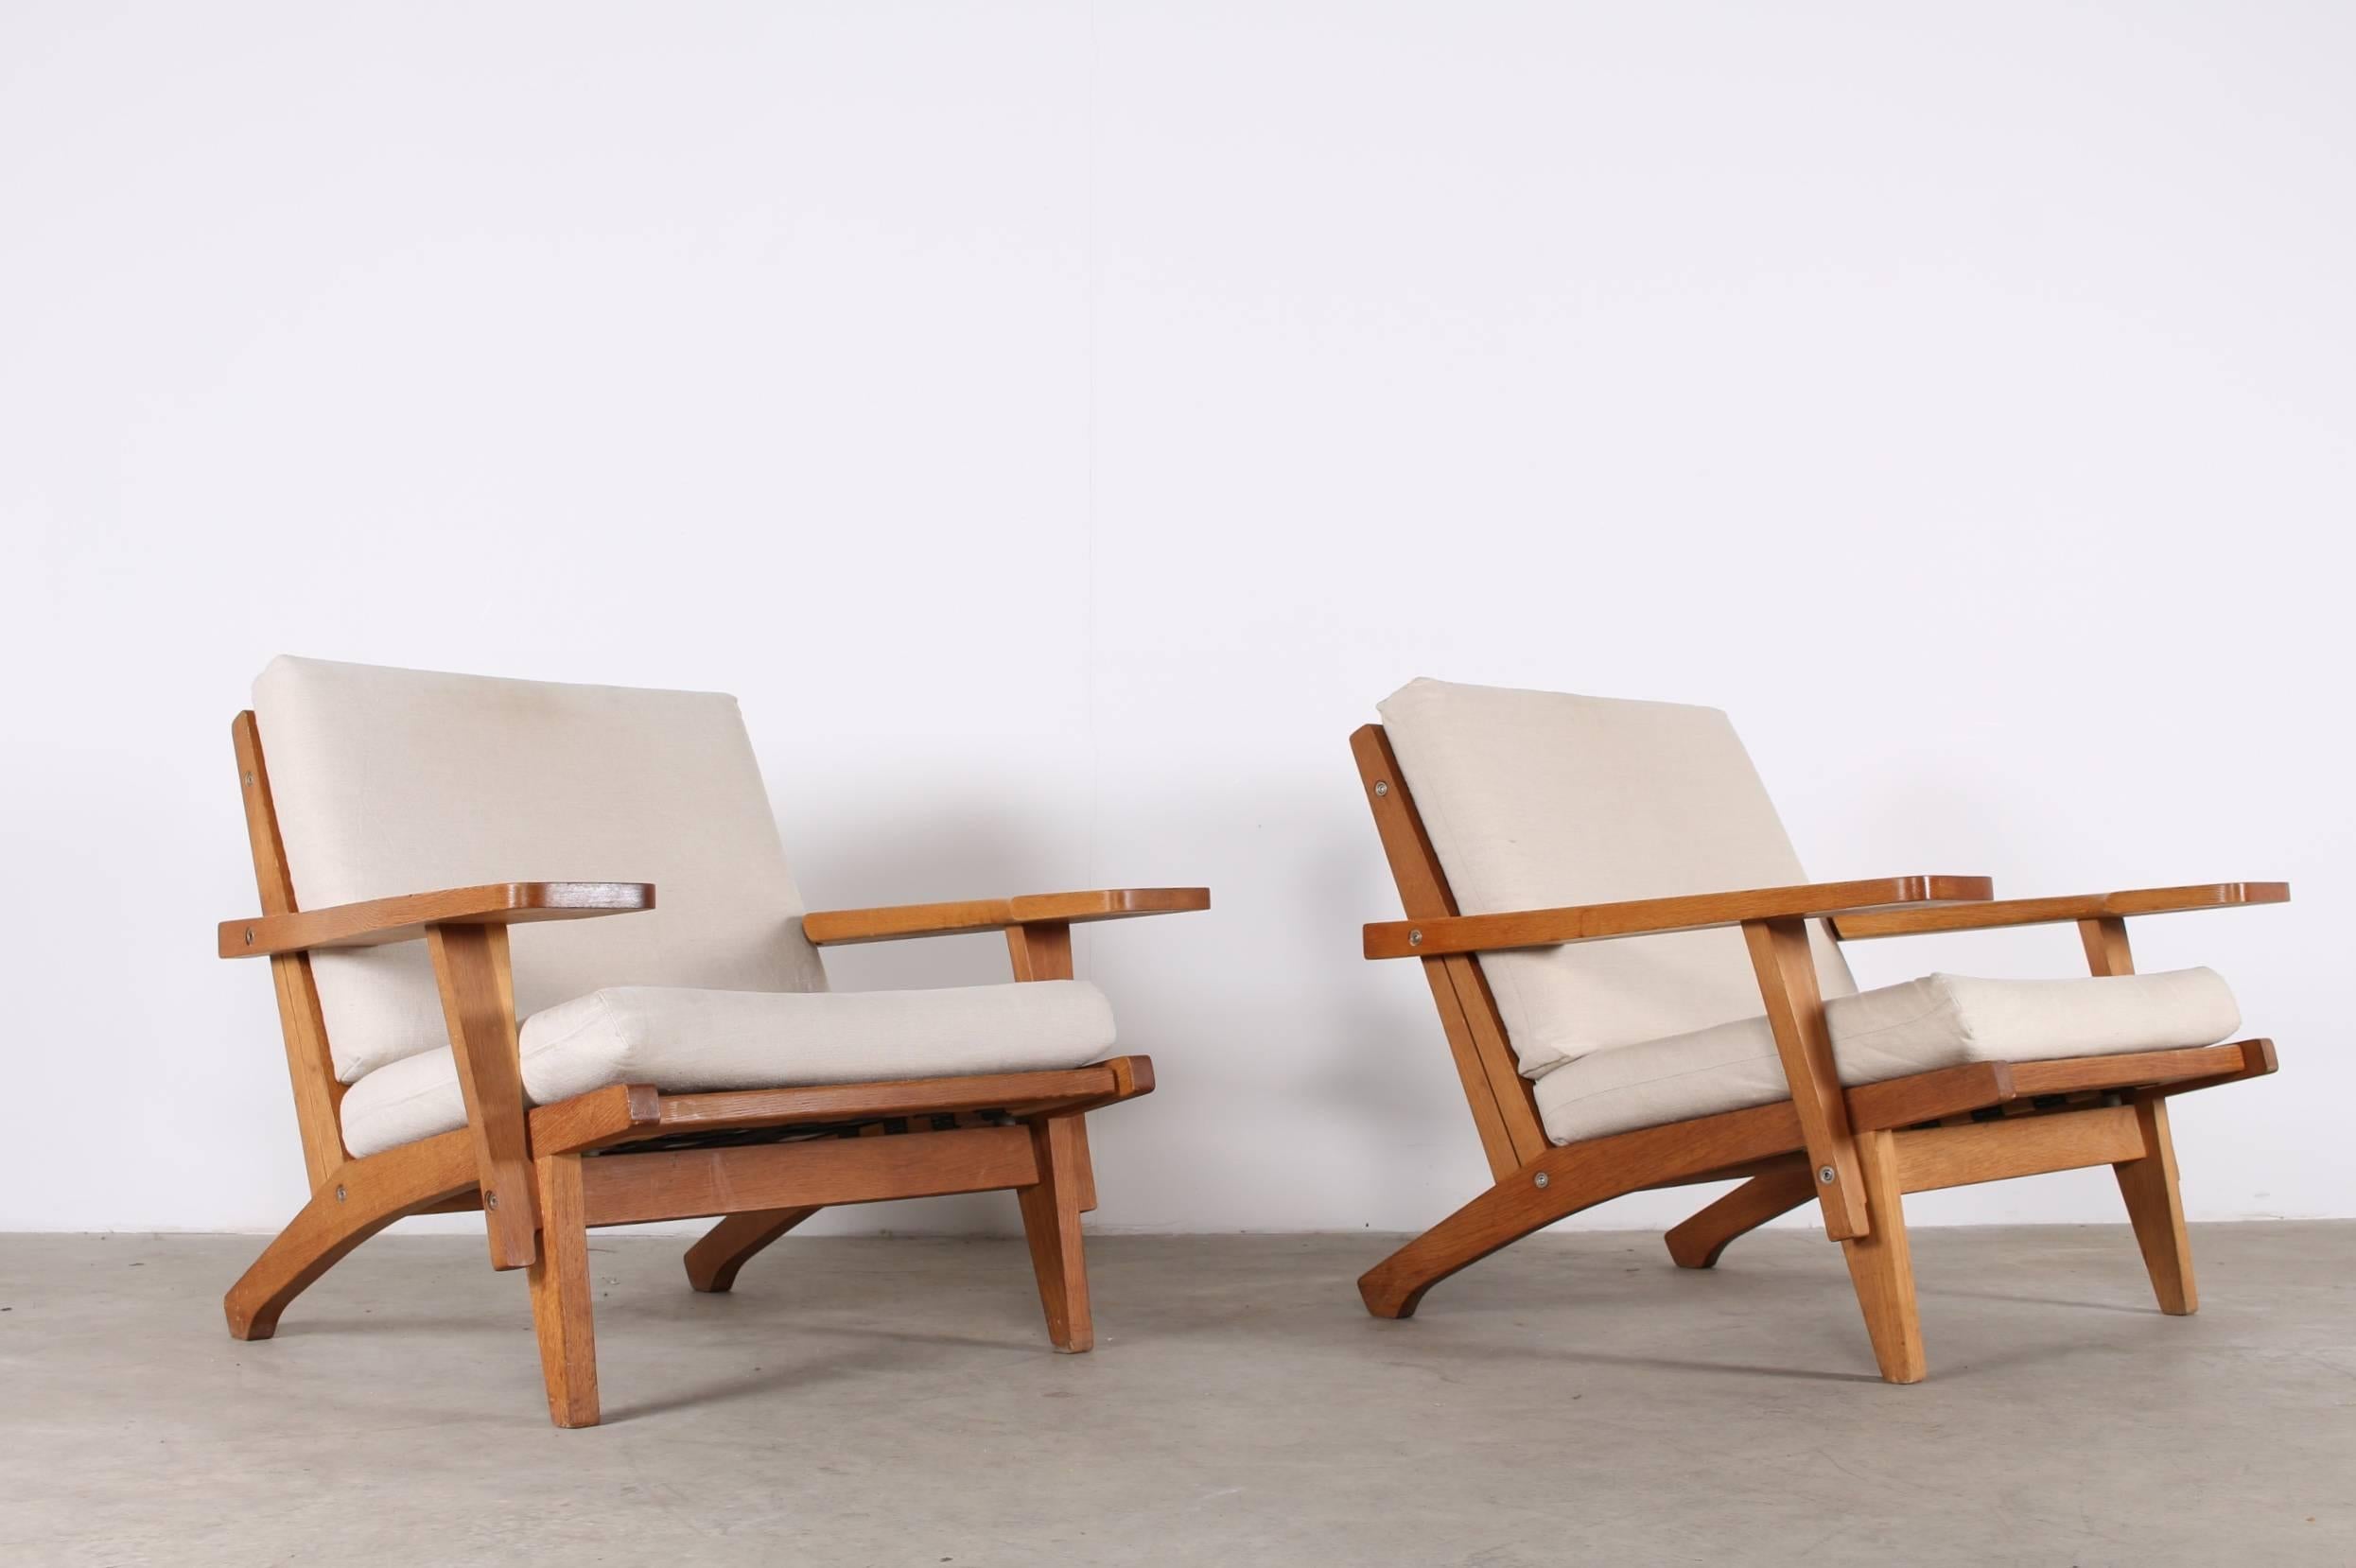 Splendid pair of GE 375 oak armchair by Hans J. Wegner for GETAMA, Denmark.
Original loose cushions, clean oak frame, very good vintage condition.
Signed on each armchair frame.